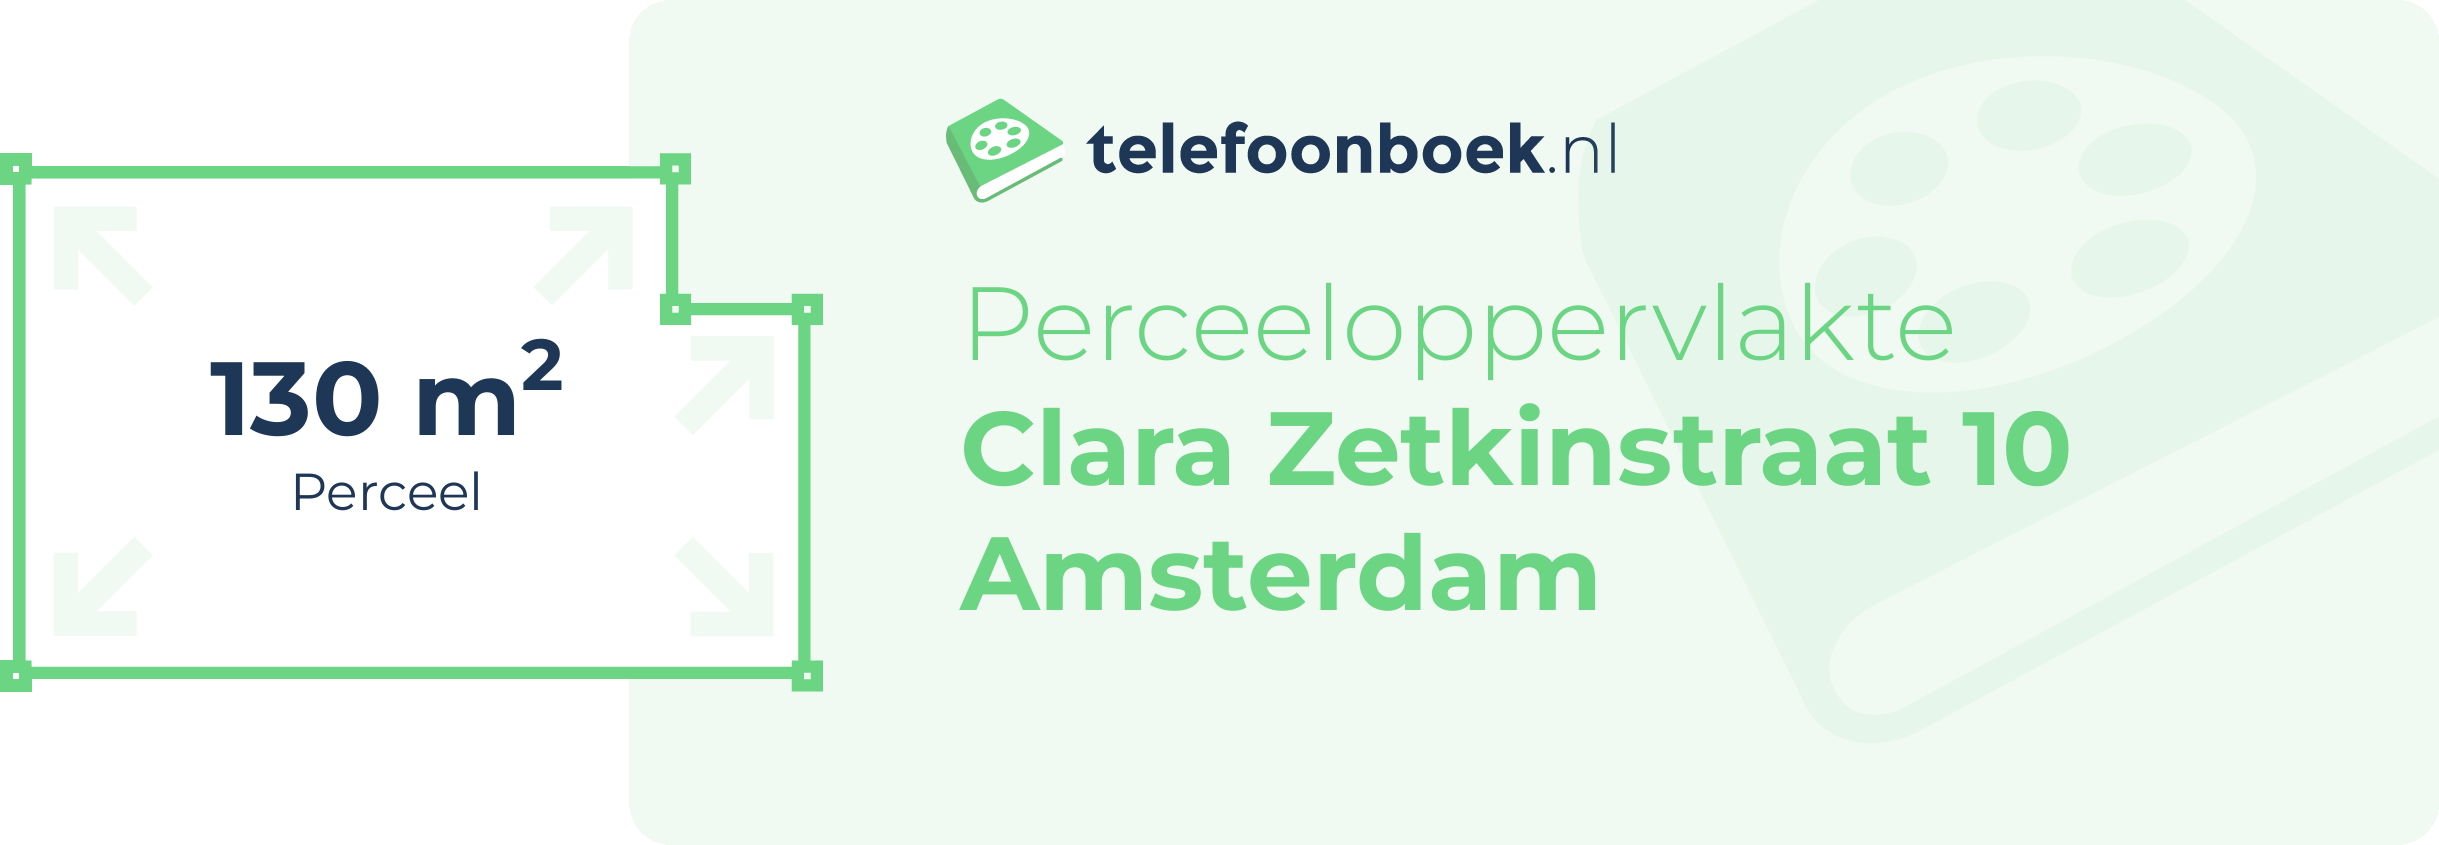 Perceeloppervlakte Clara Zetkinstraat 10 Amsterdam